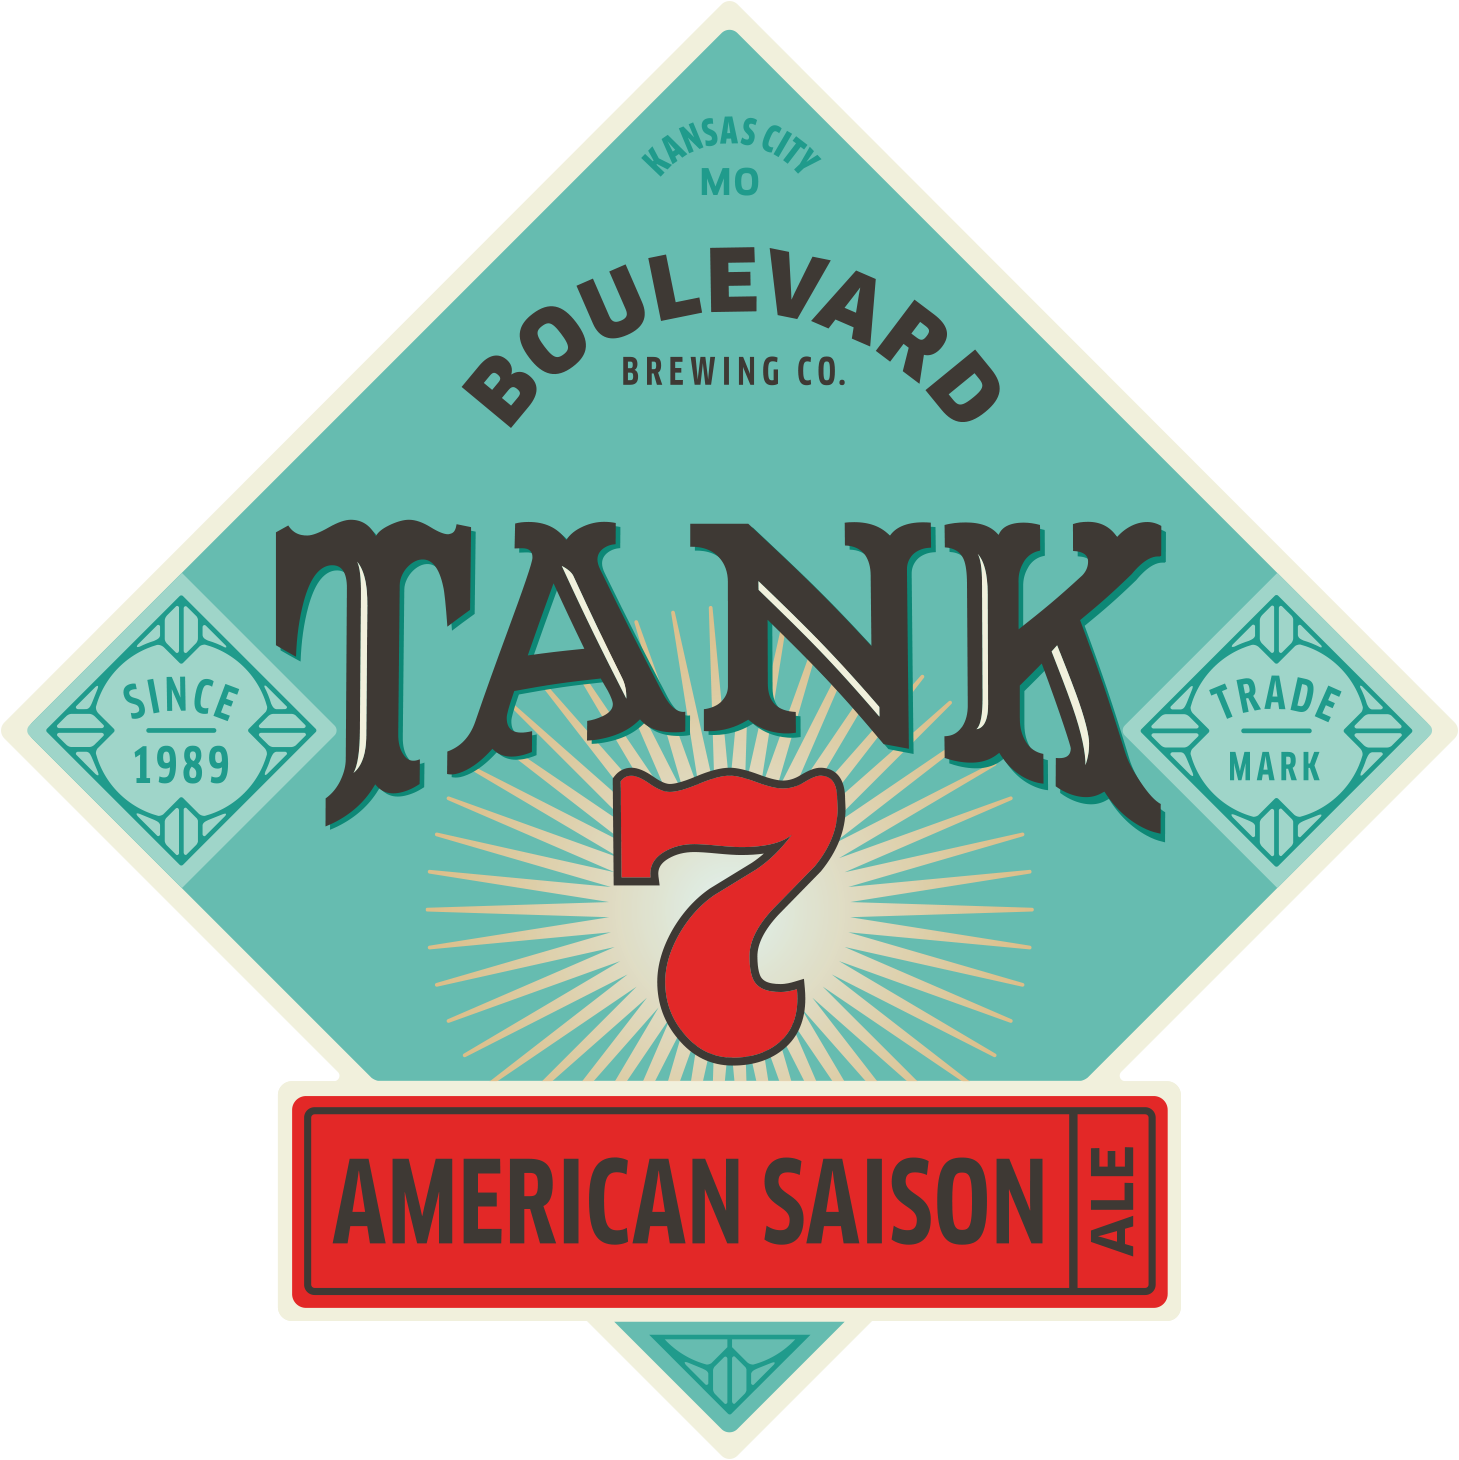 Tank 7 Boulevard Brewing Company